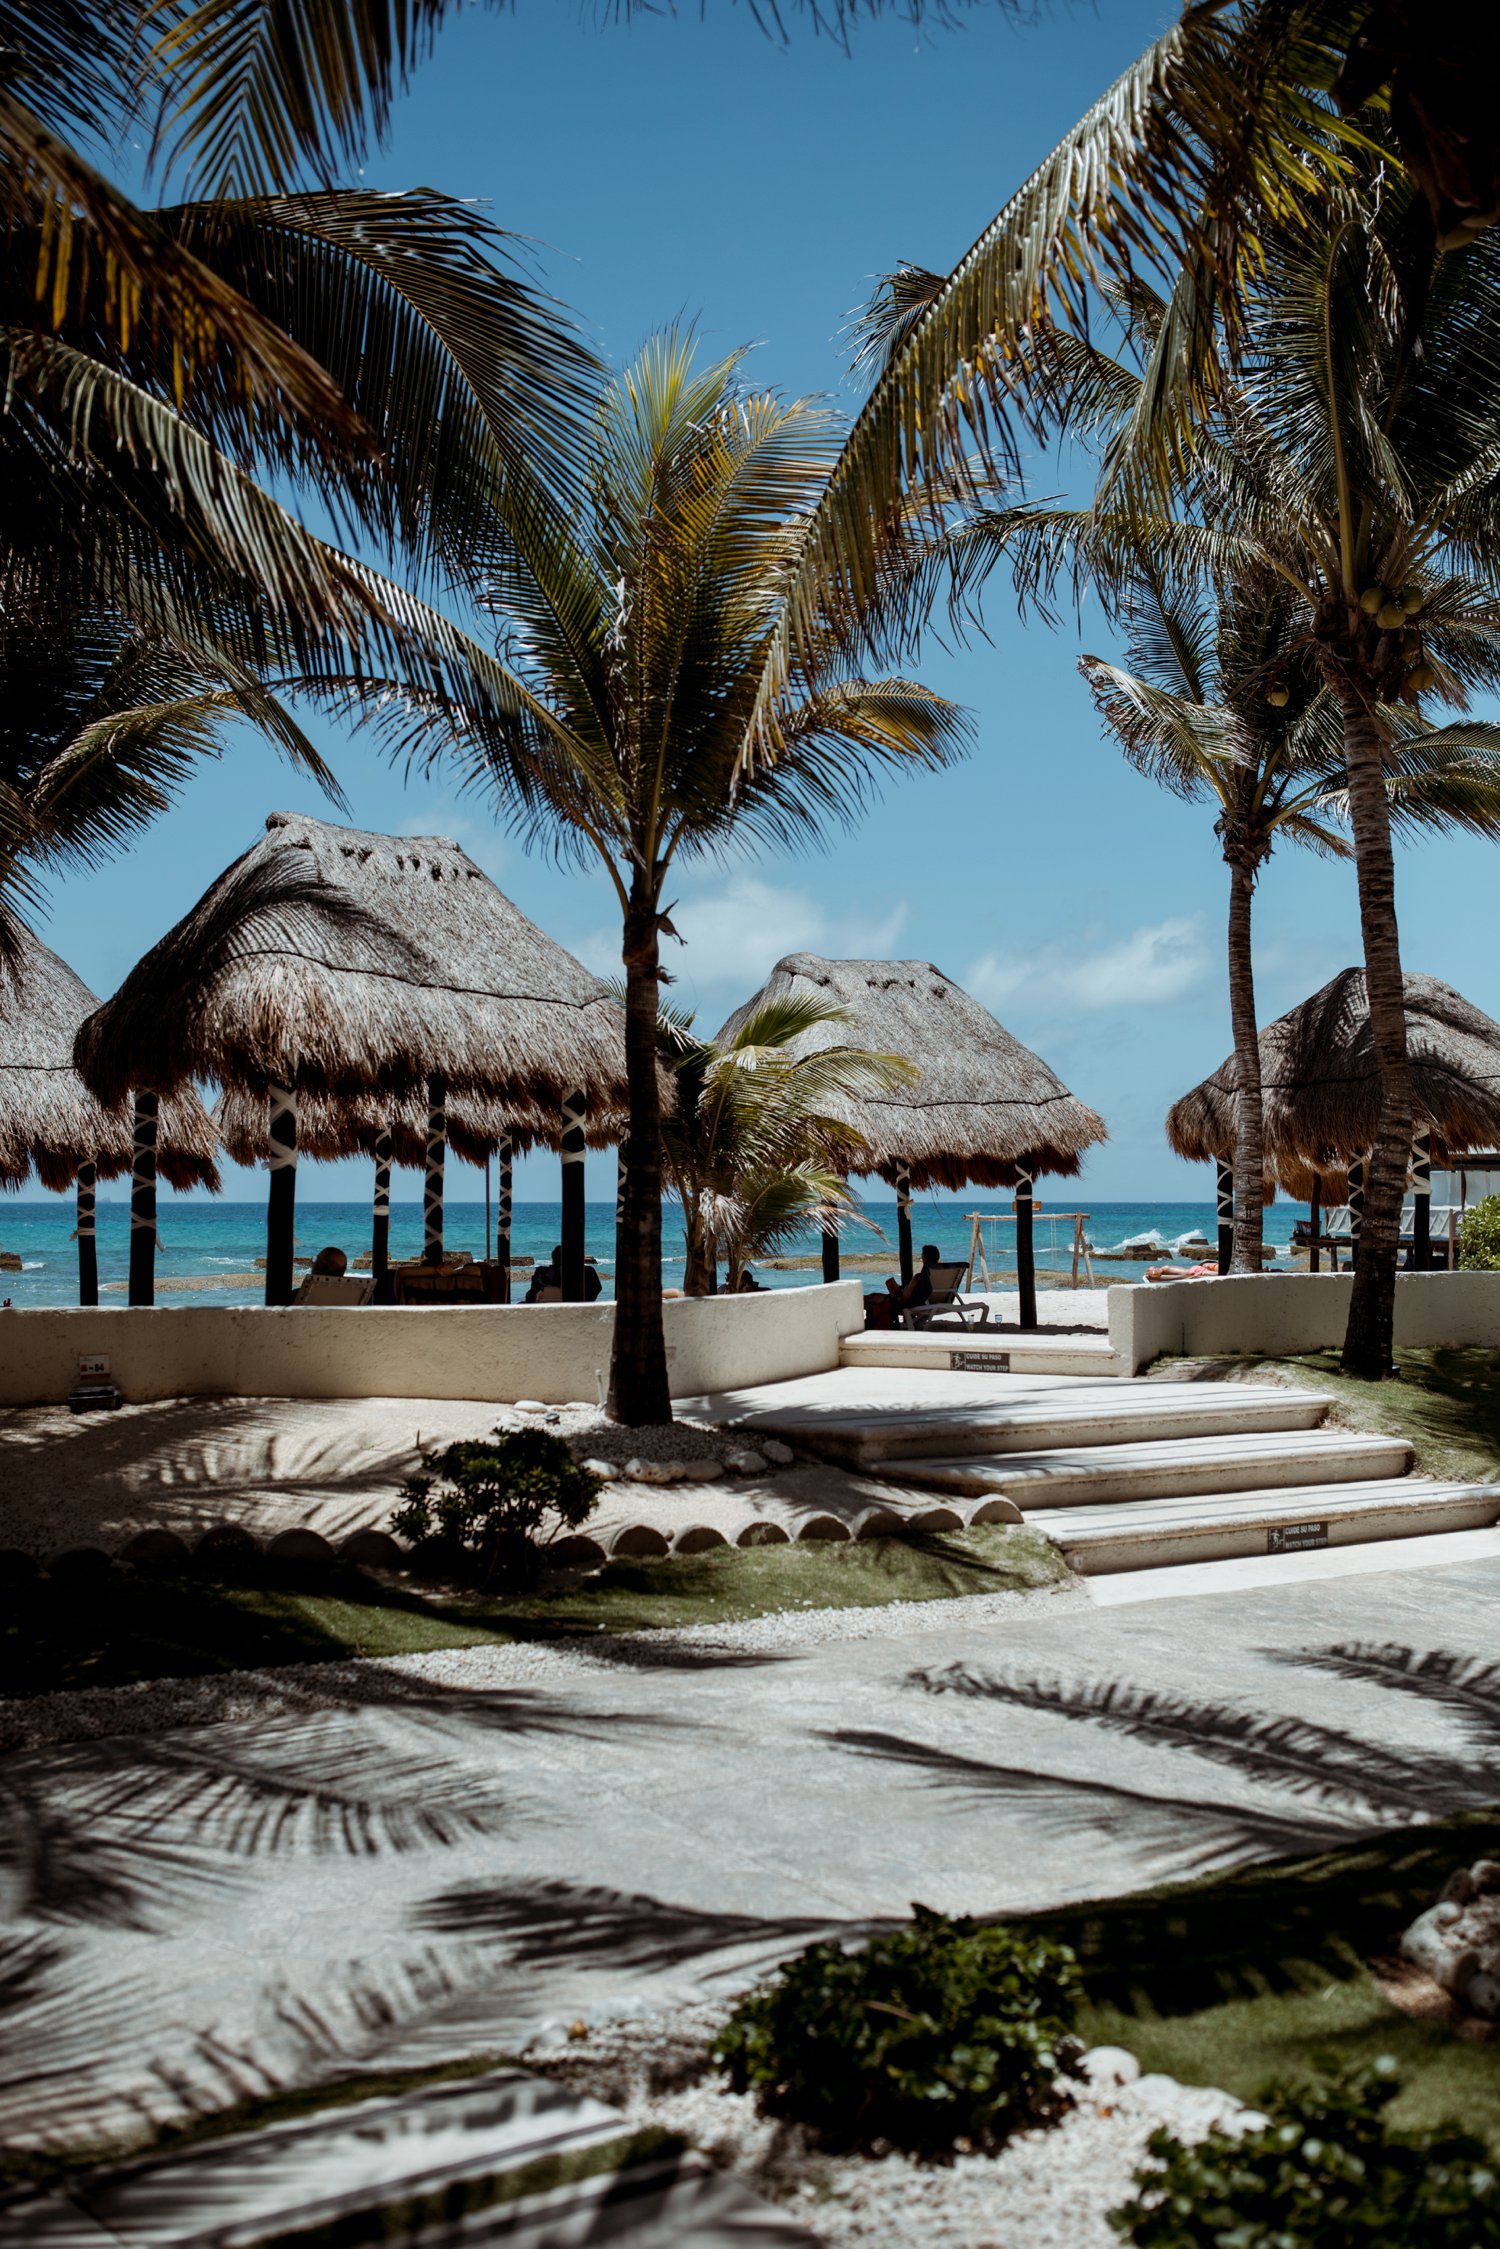  images by feliciathephotographer.com | destination wedding photographer | el dorado riviera maya | glamorous | beachside | resort | venue | palm trees | cabanas | ocean side | 